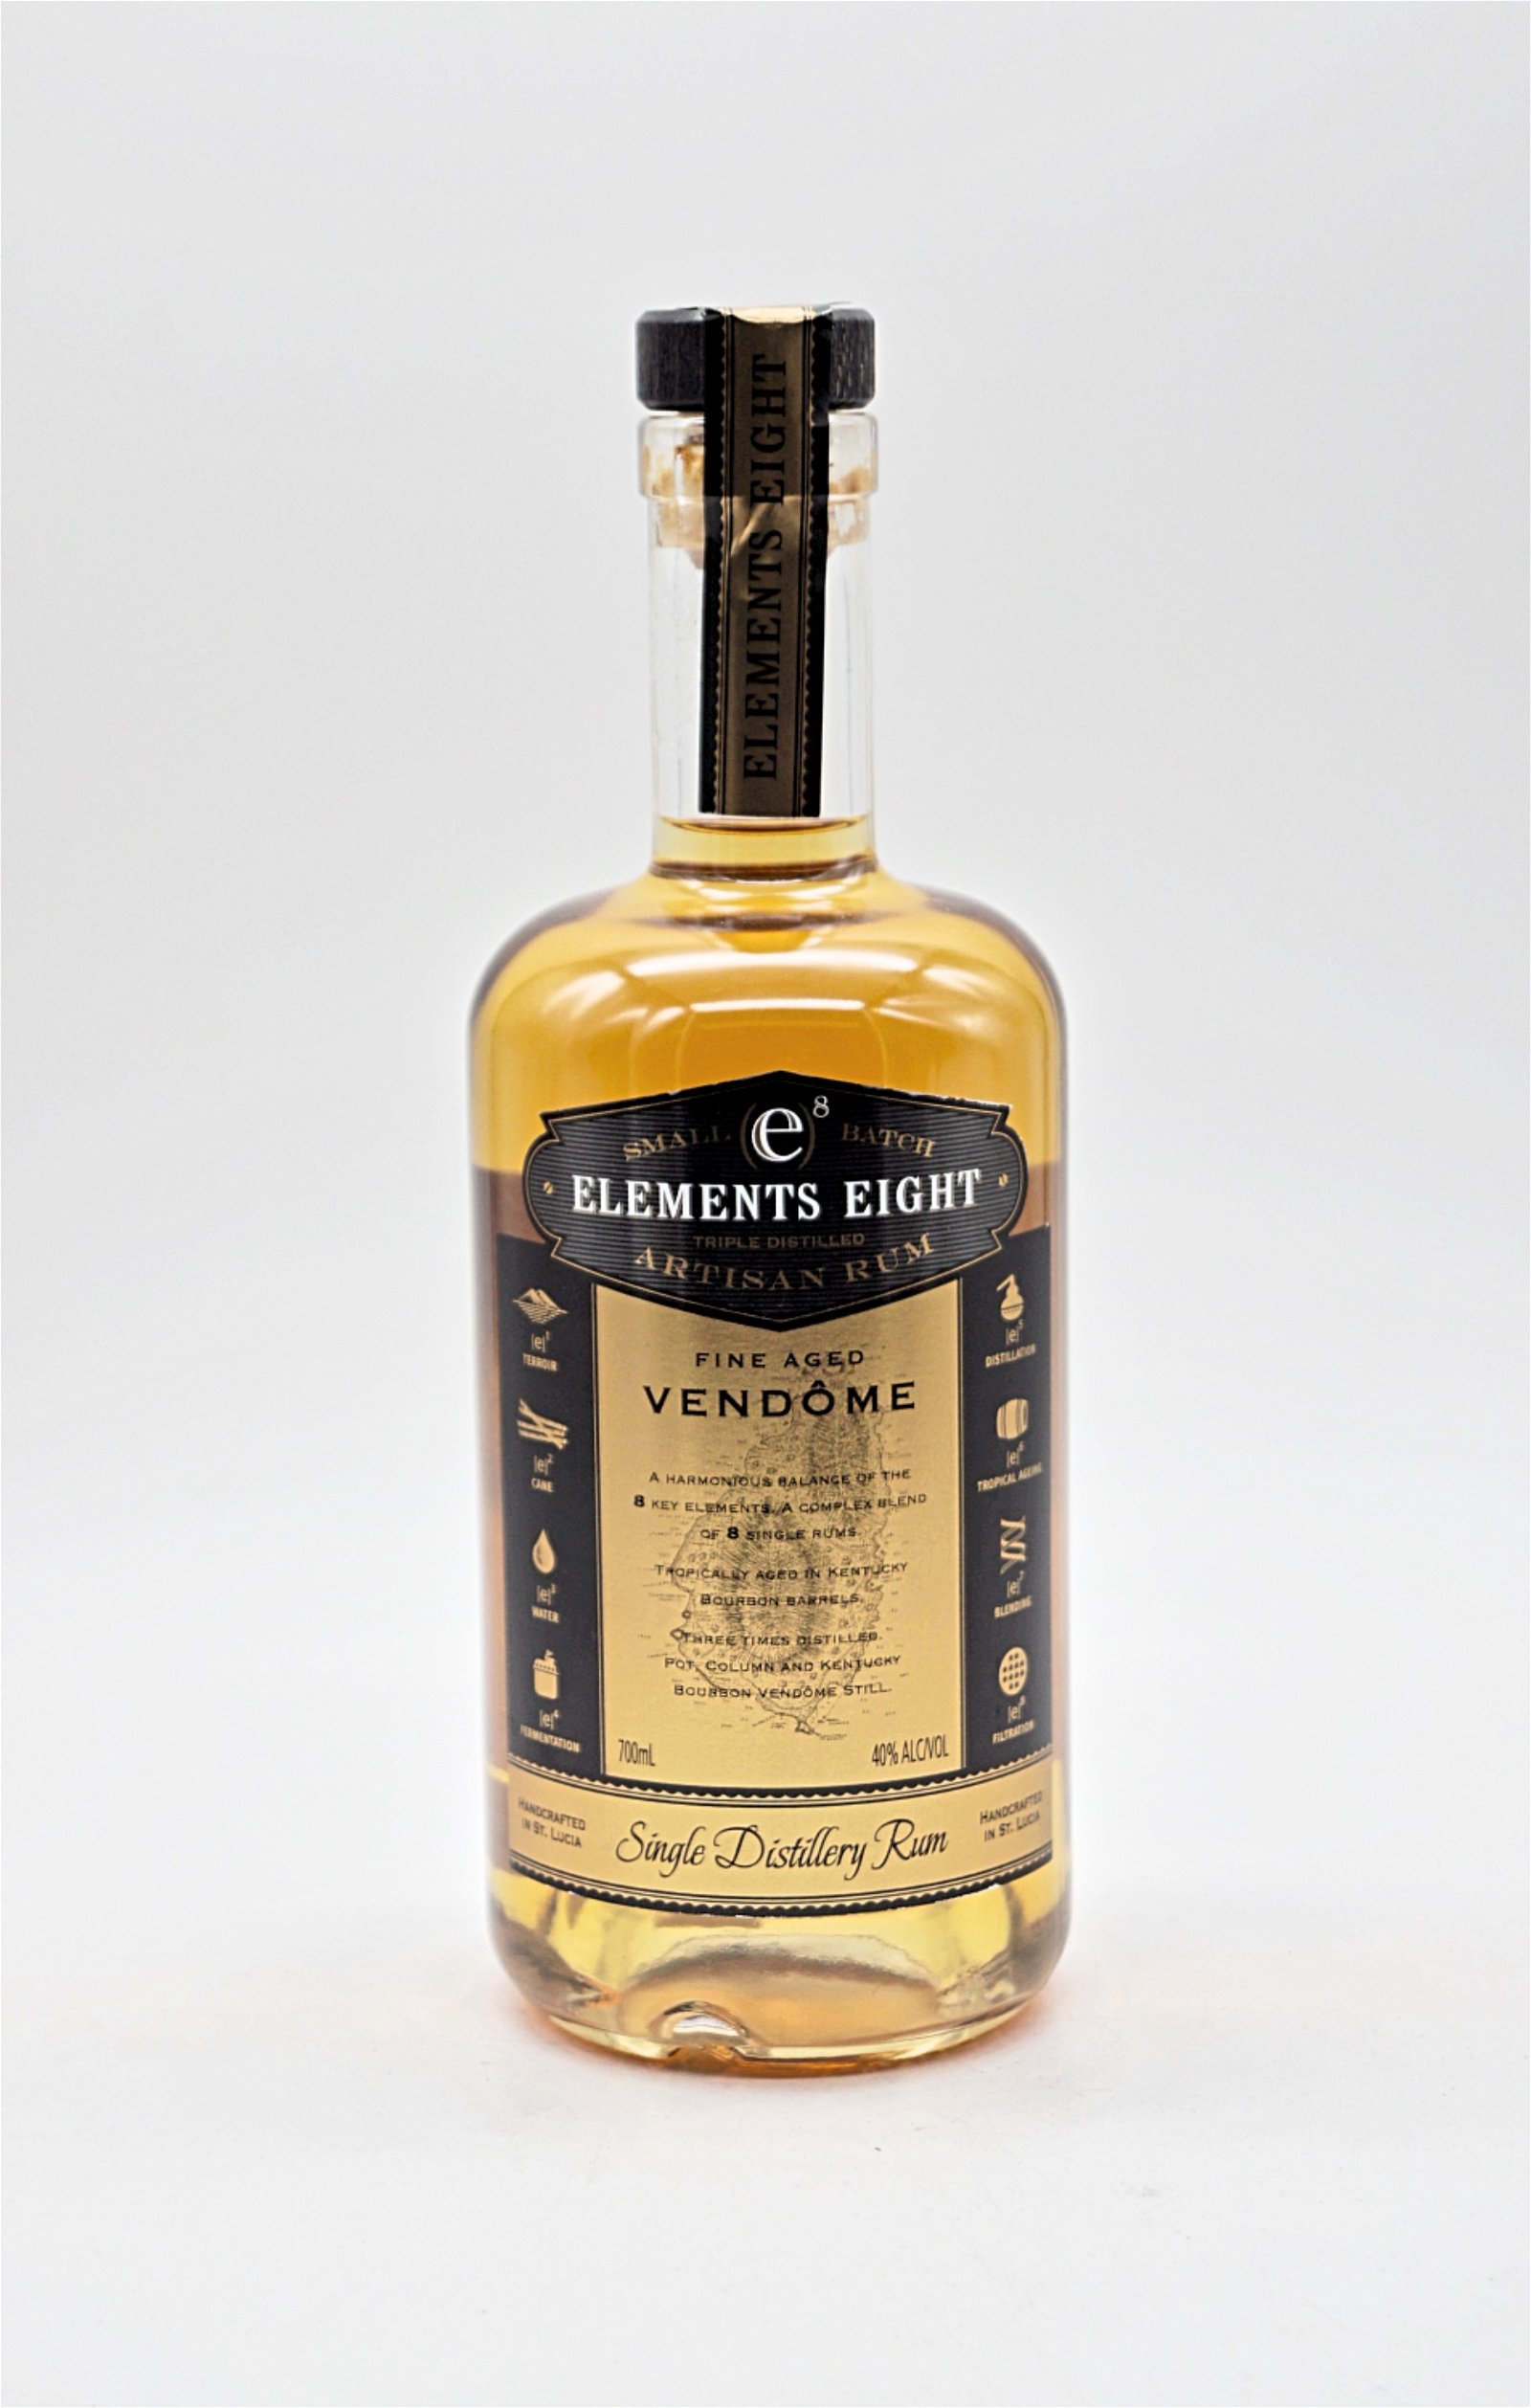 Elements Eight Vendome Artisan Rum